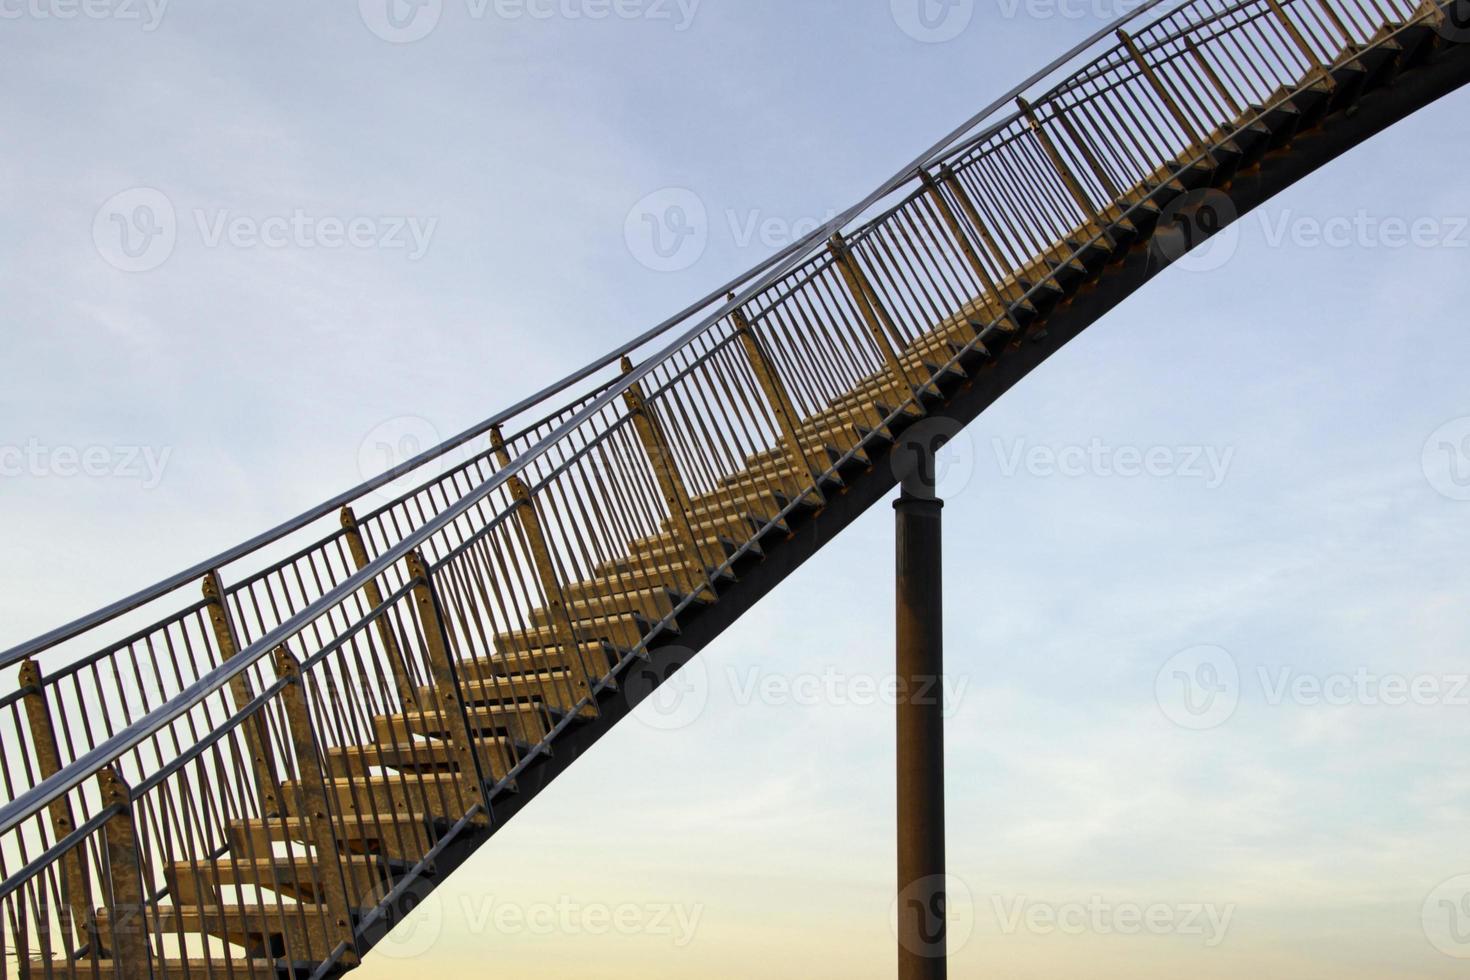 carrièrestappen - een steile opwaartse trap voor de middaghemel foto